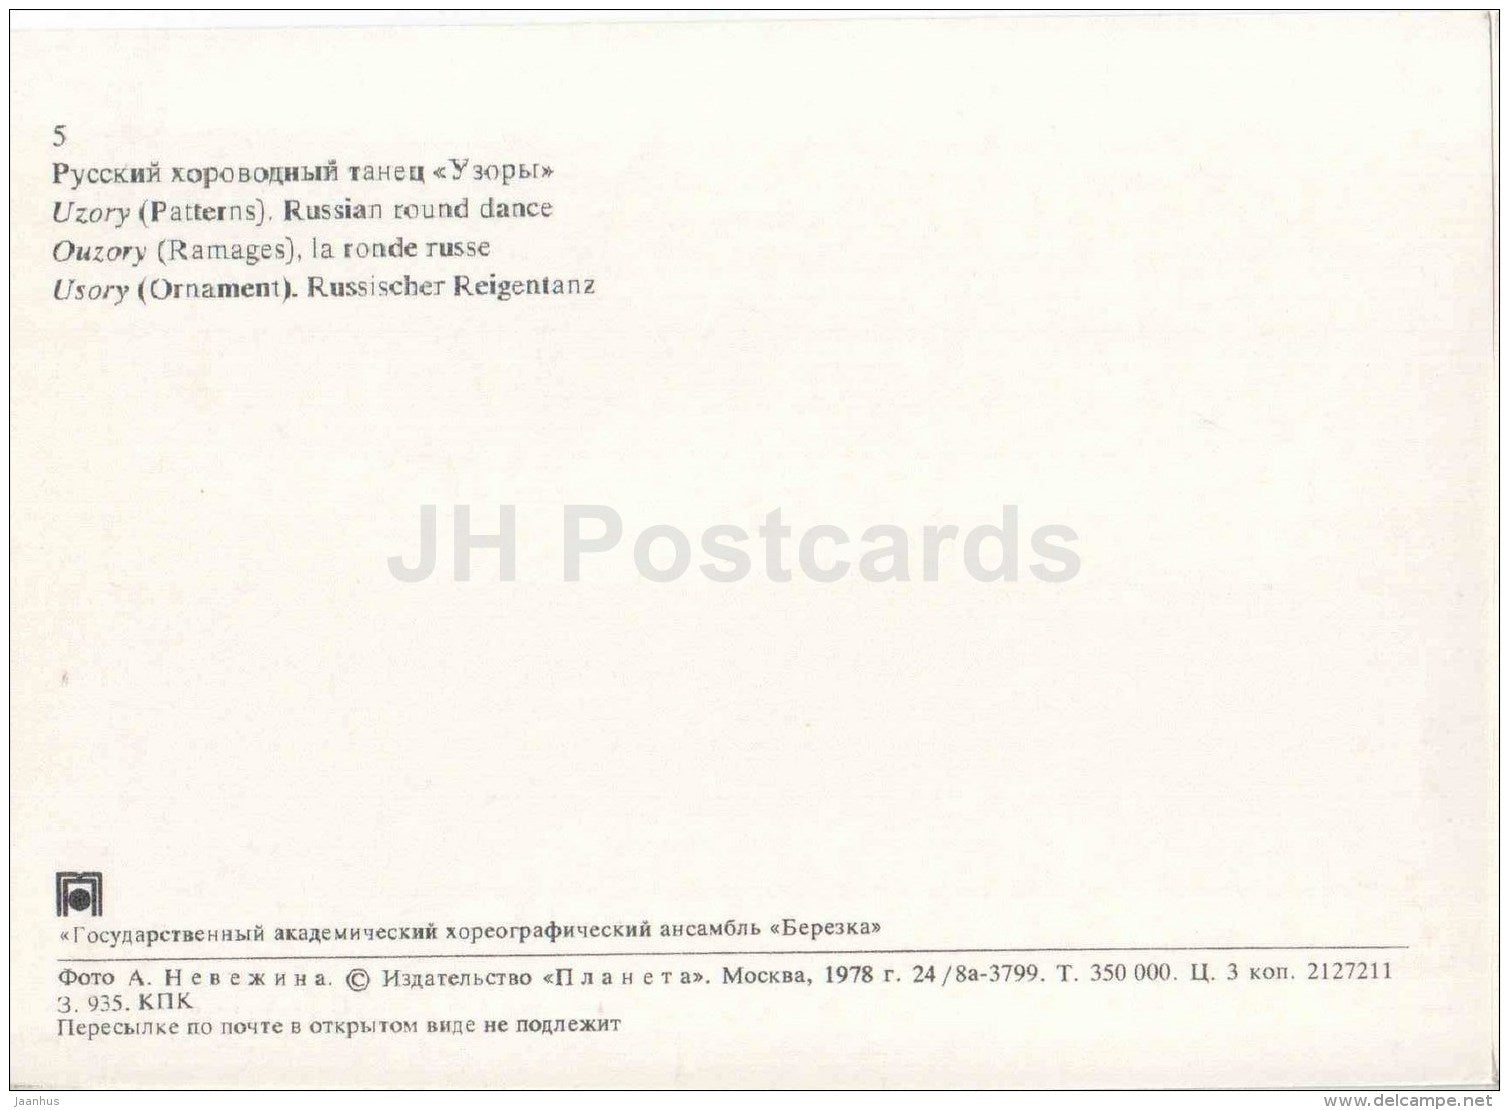 Siberian Suite - 1 - State Academic Choreographic Ensemble Berezka - Russia USSR - 1978 - unused - JH Postcards